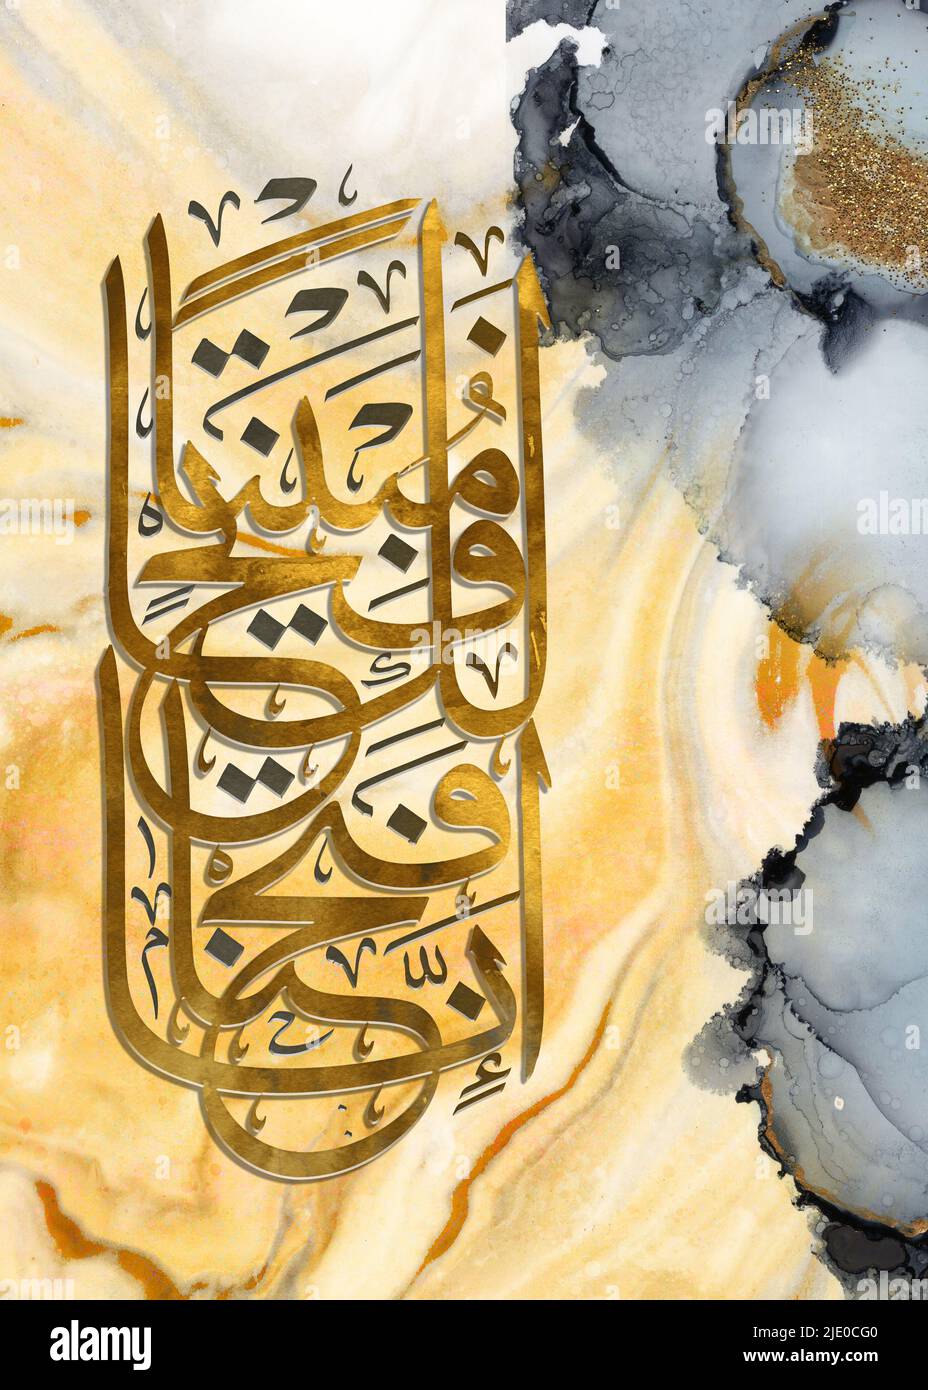 Inna fatahna laka fathan mubina digital arabic calligraphy painting for islamic home decor Stock Photo